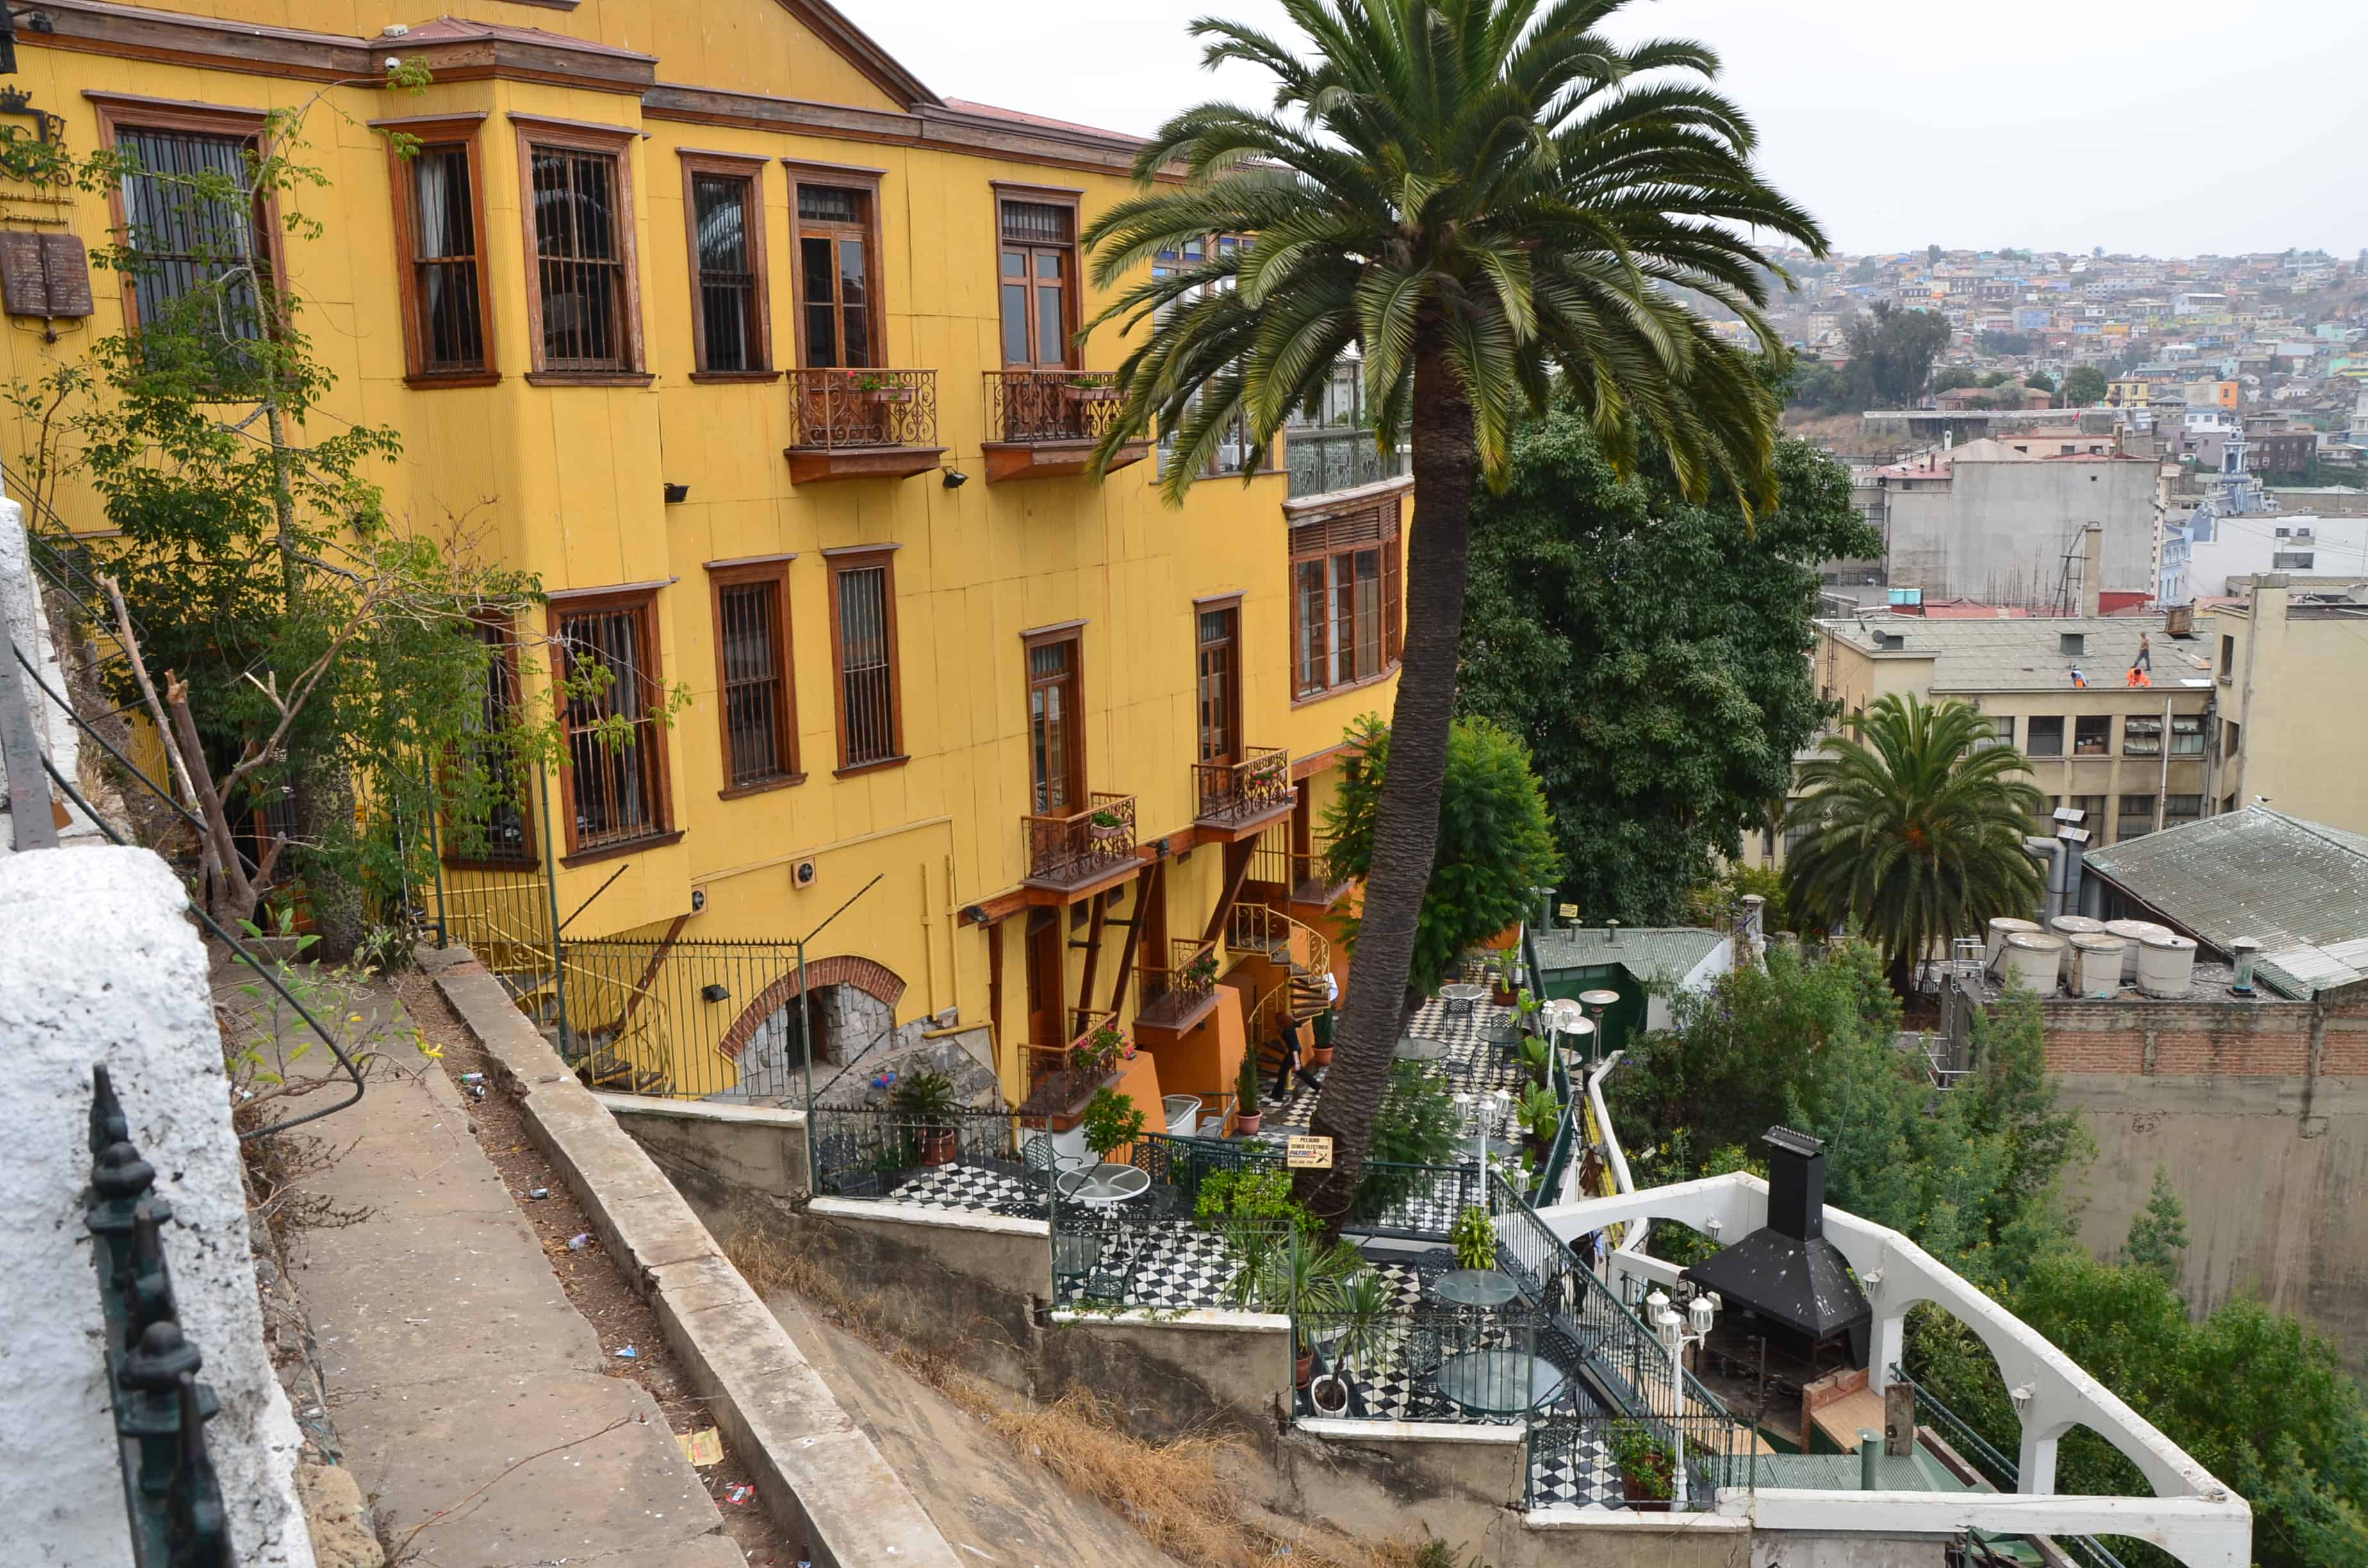 Paseo Gervasoni in Valparaíso, Chile